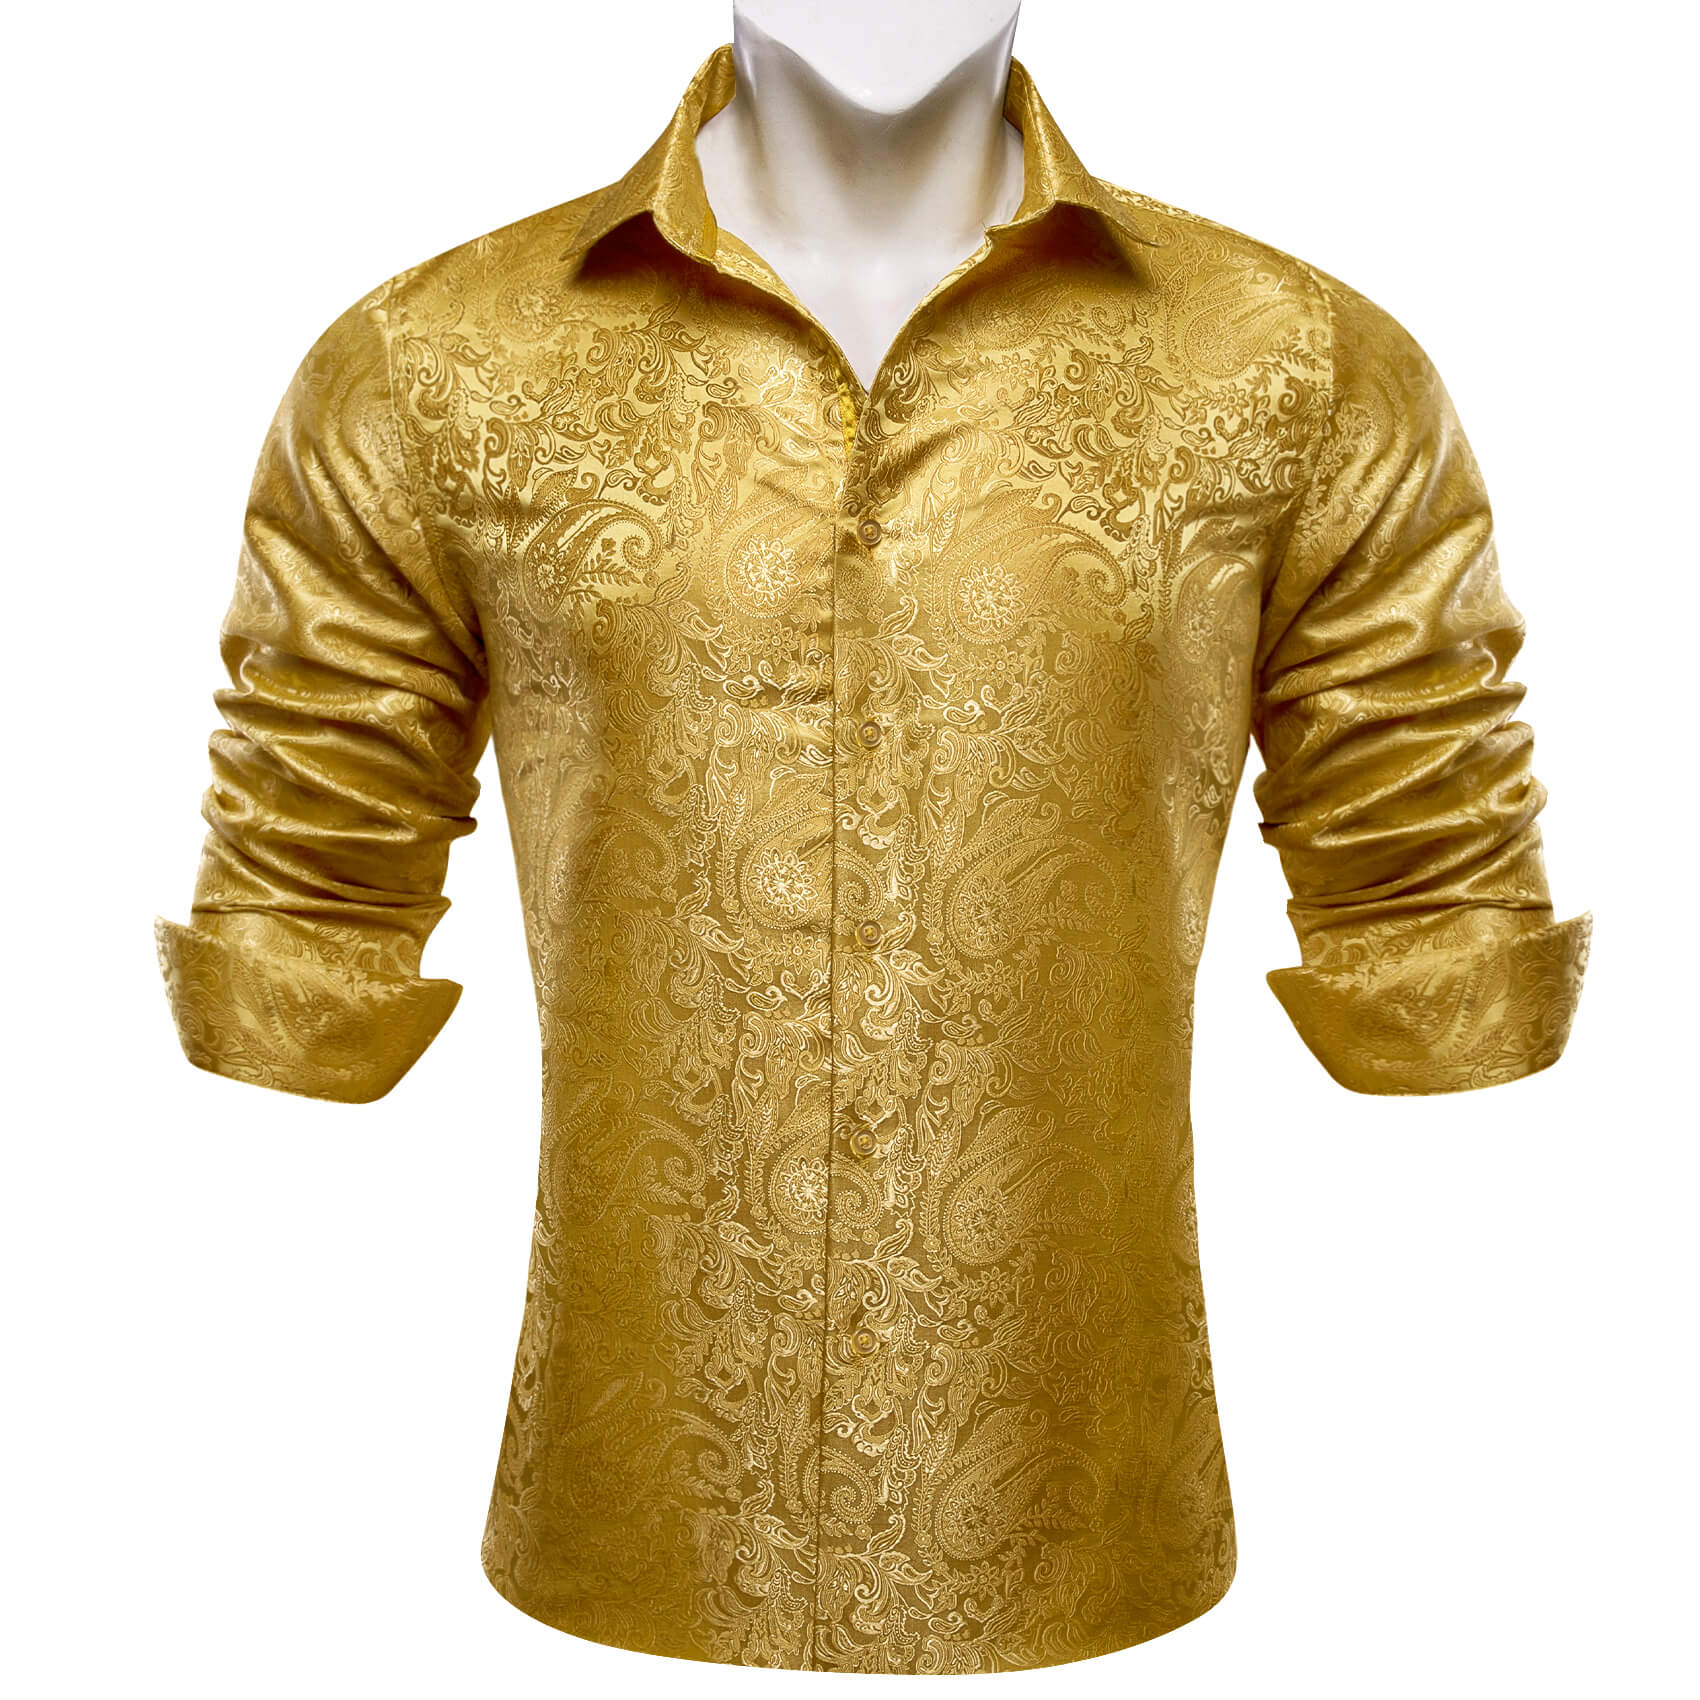 Barry.wang Men's Shirt Golden Jacquard Paisley Silk Long Sleeve Shirt